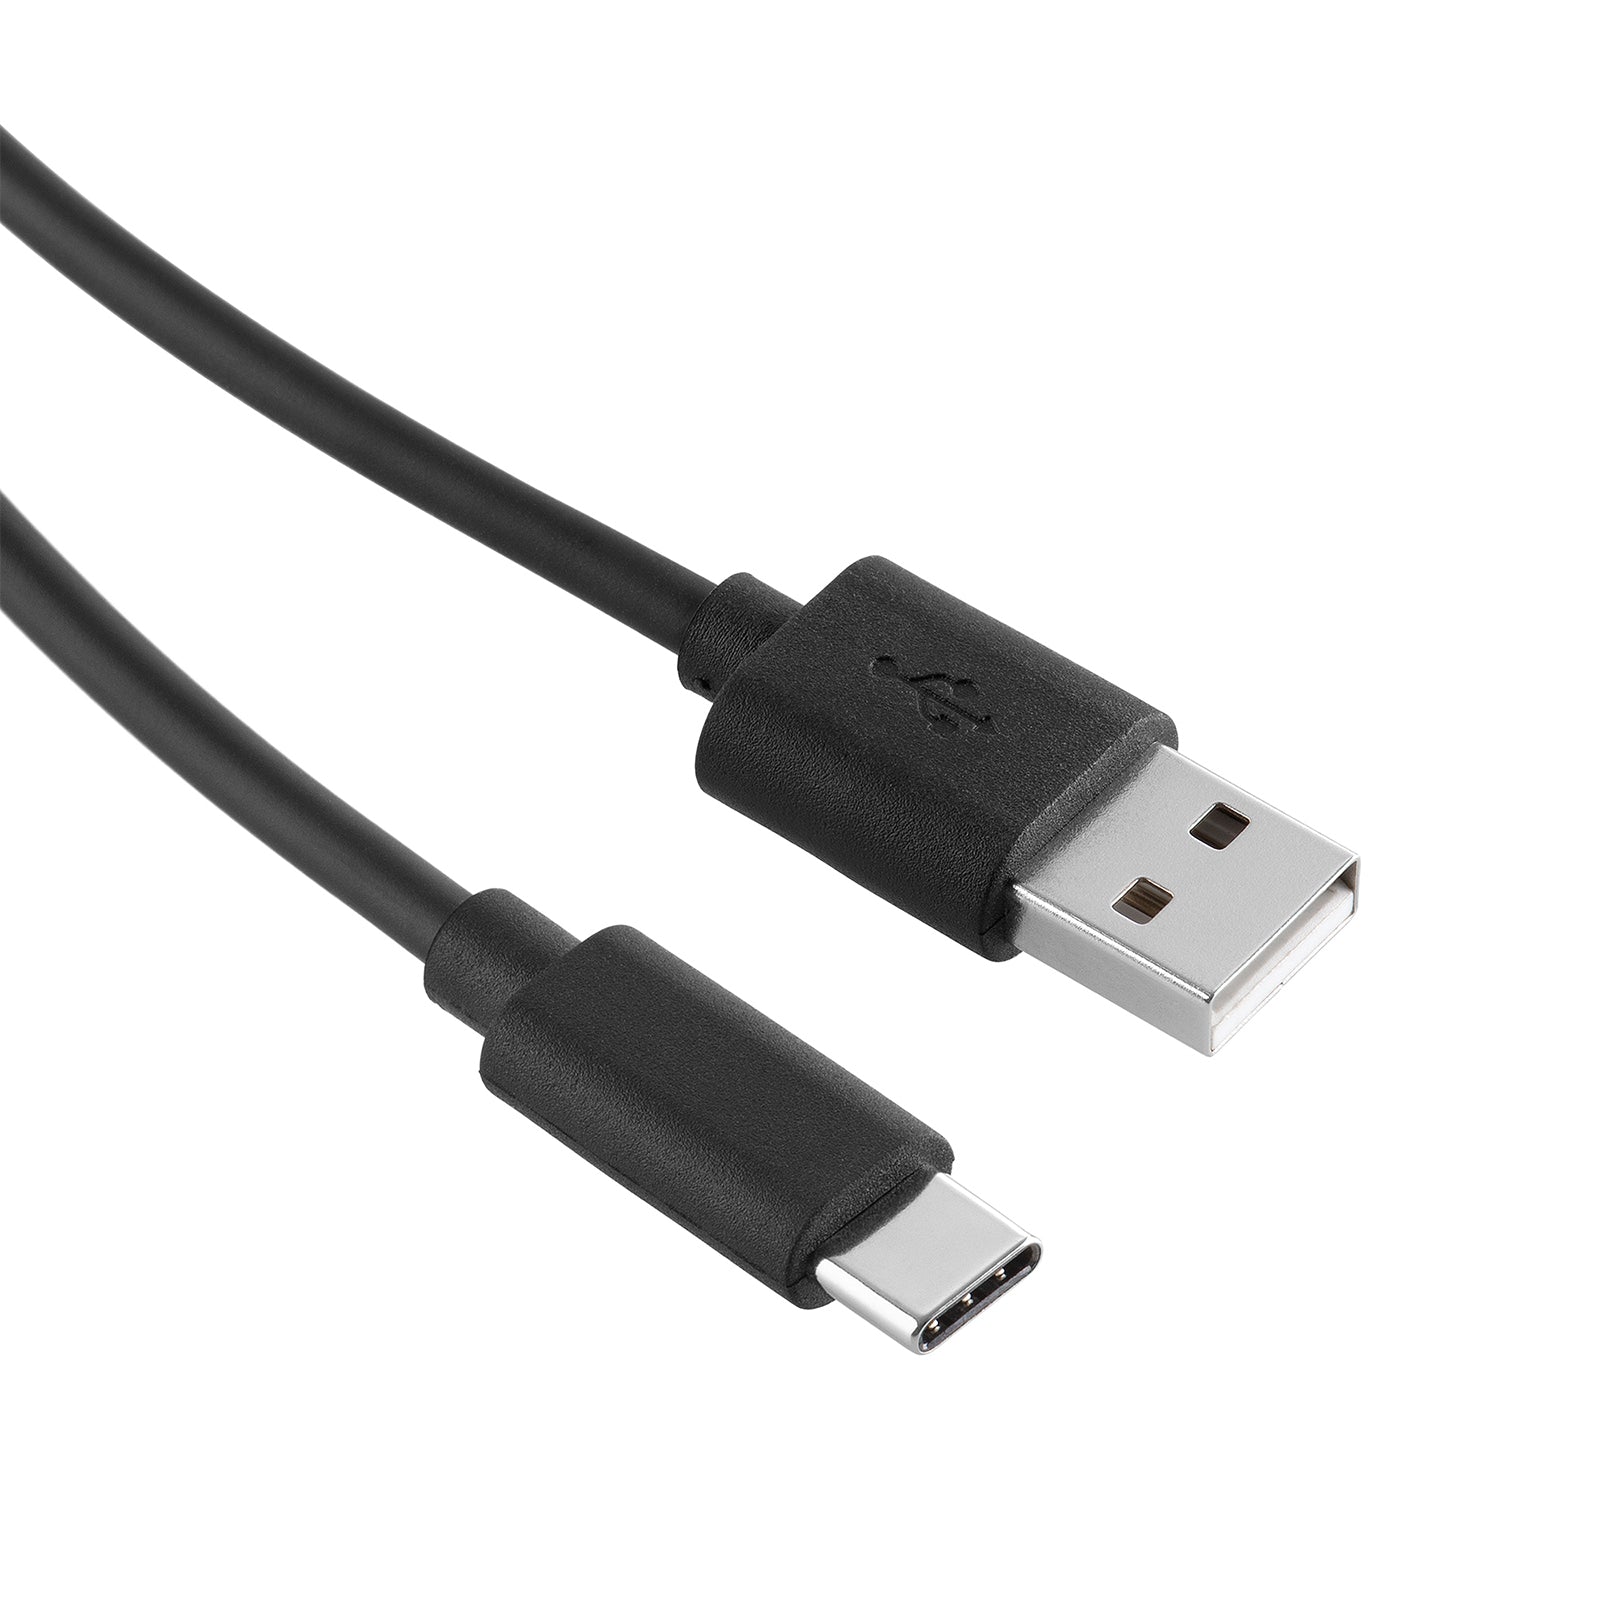 1.2m USB-A to USB-C USB 2.0